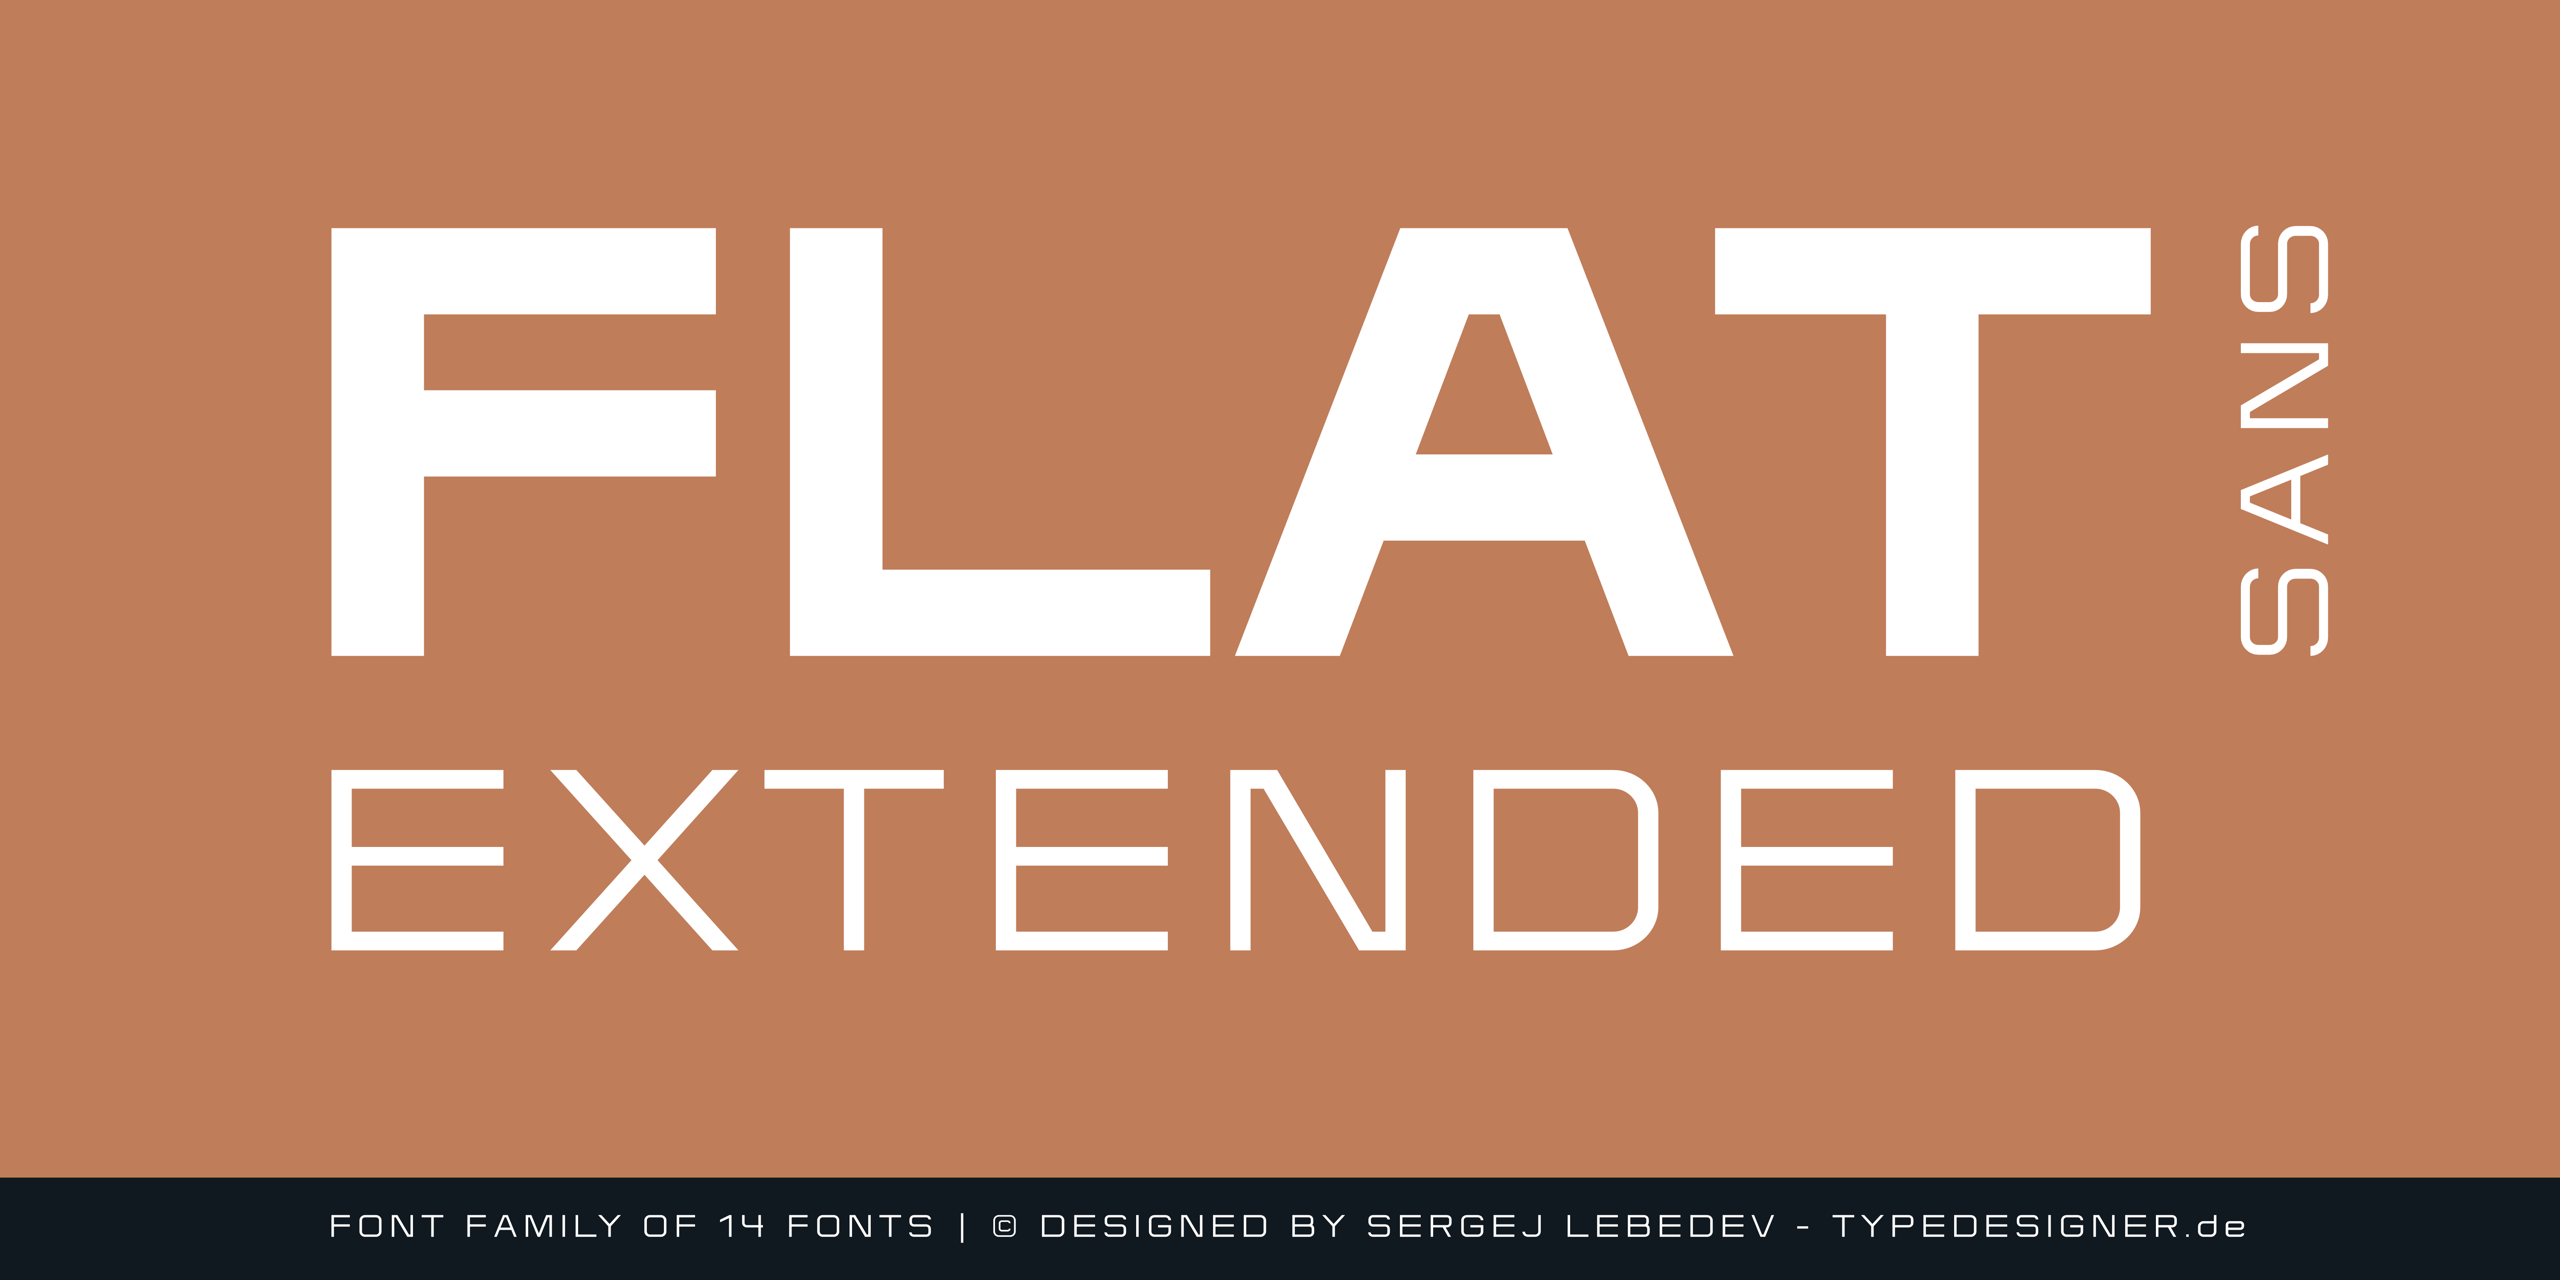 Flat Sans Extended font family of 14 fonts. Type Design by Sergej Lebedev.